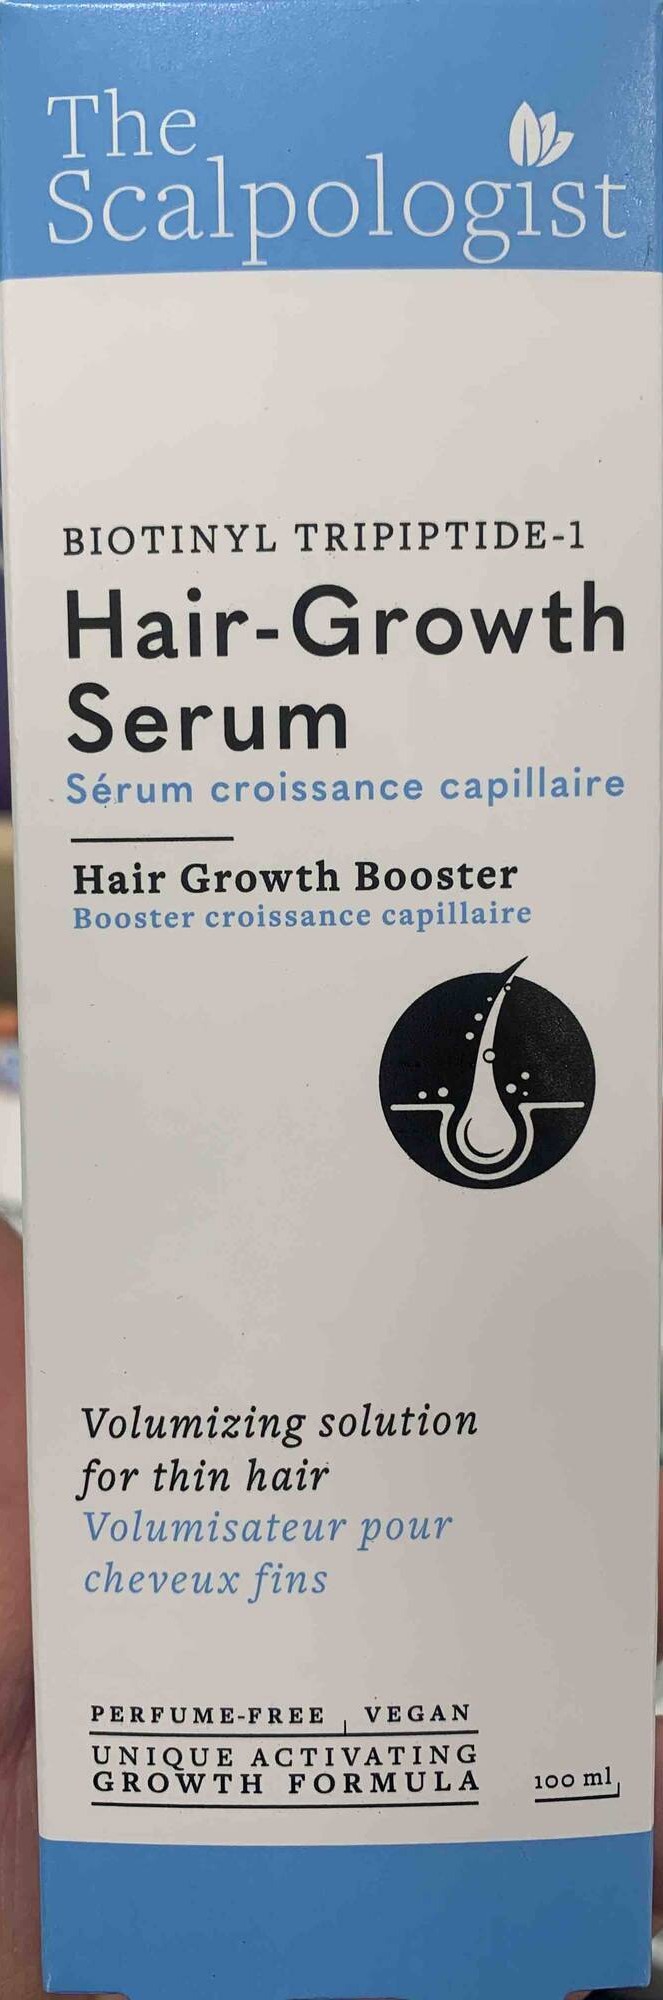 The Scalpologist Hair-growth Serum